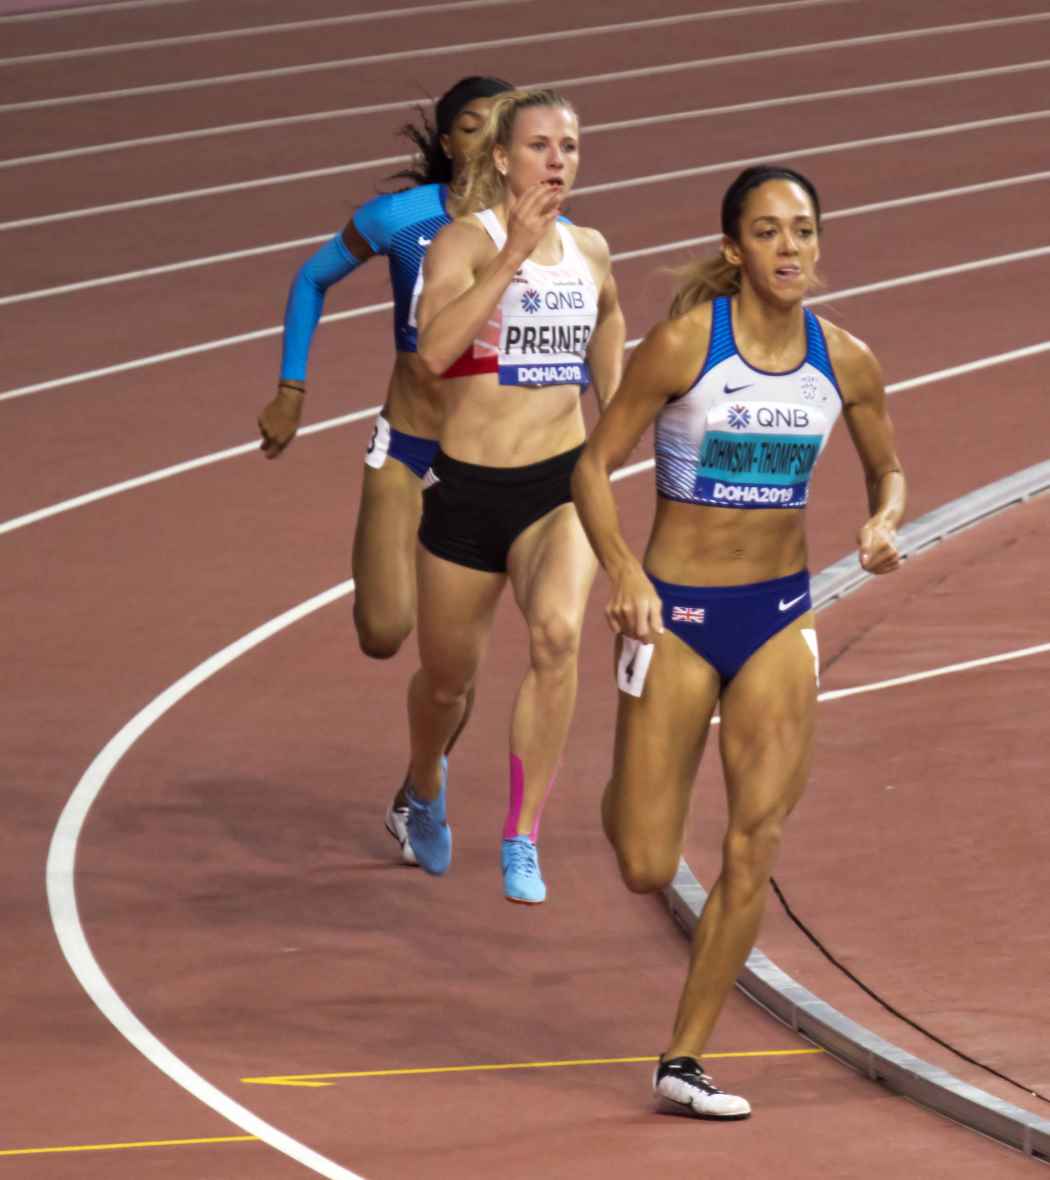 2019 World Athletics Championships – Women's heptathlon - Wikipedia